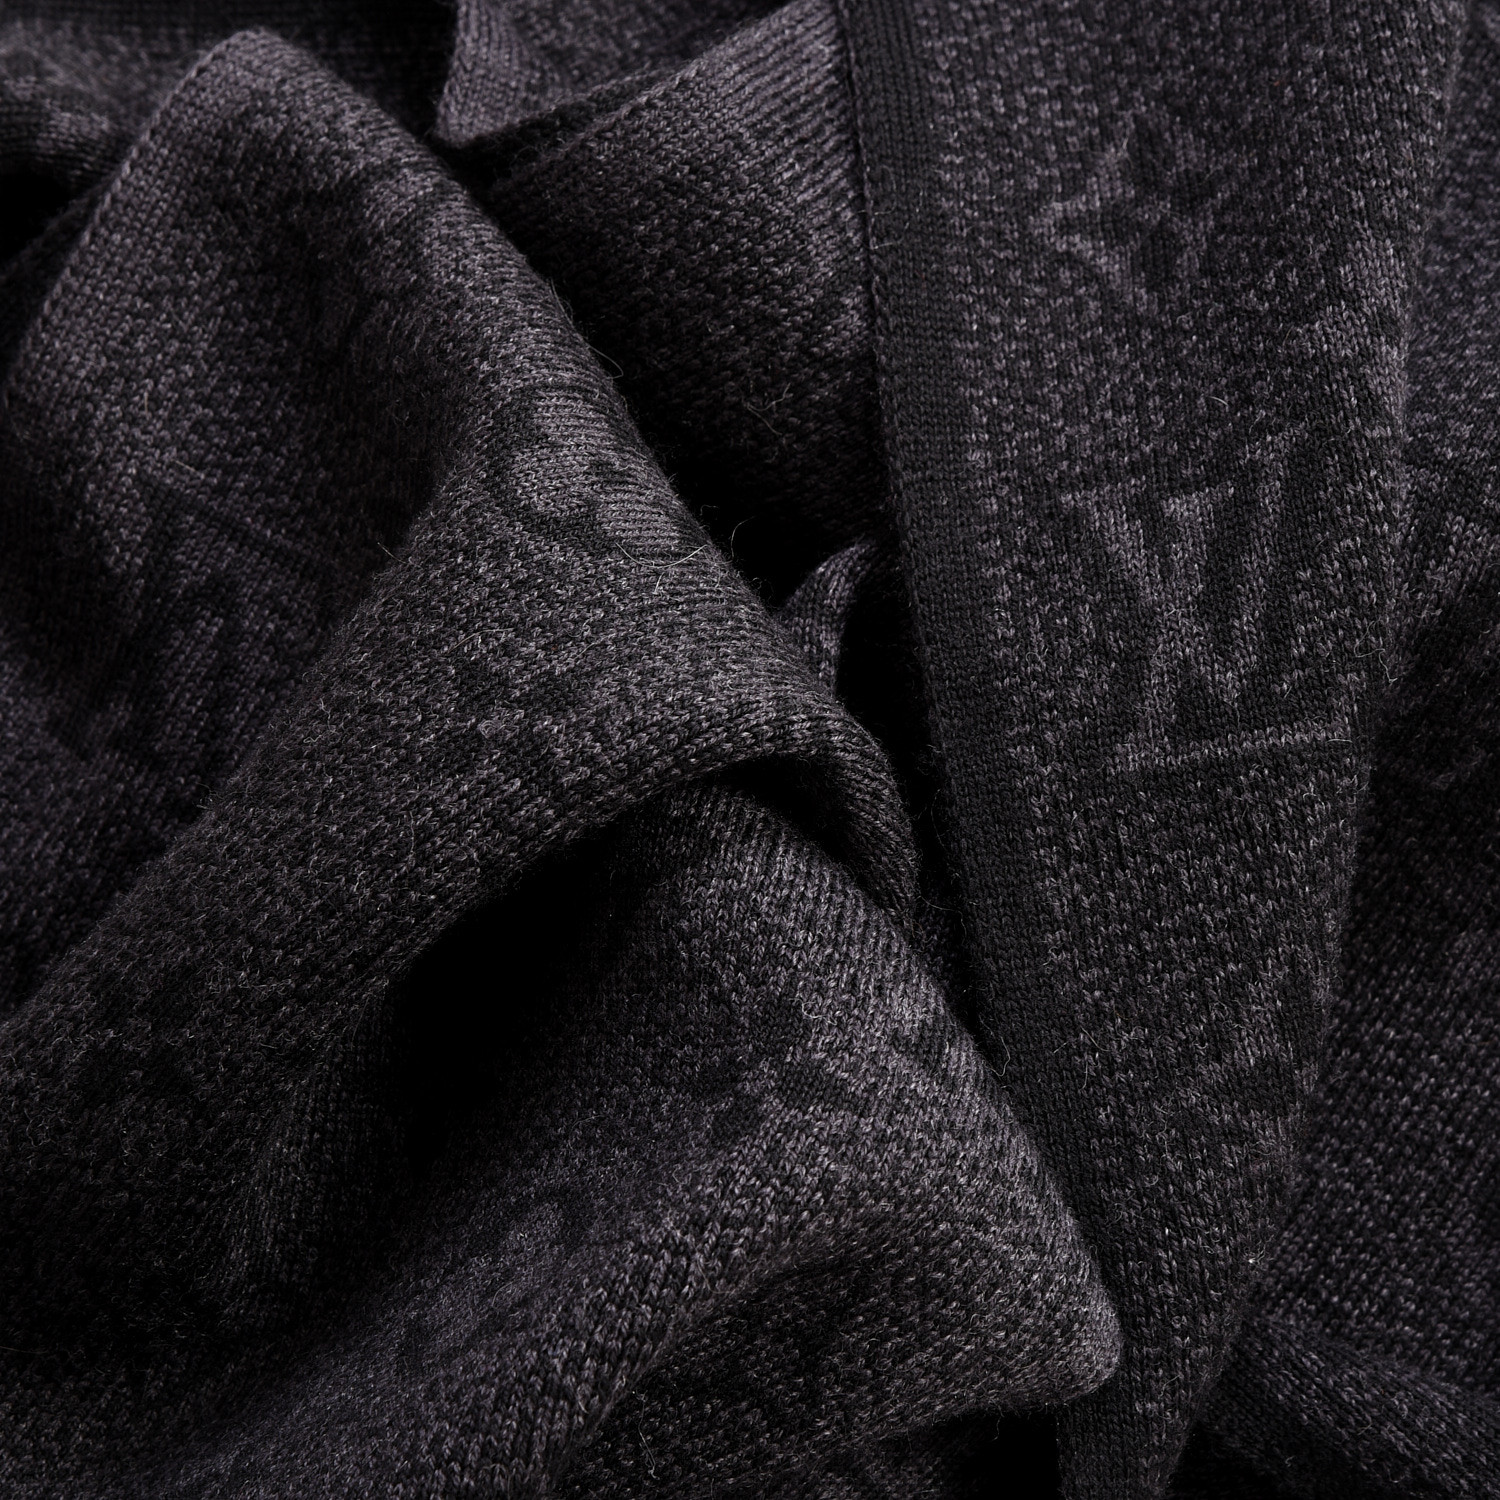 LOUIS VUITTON Wool Monogram Scarf Black Charcoal Grey 546261